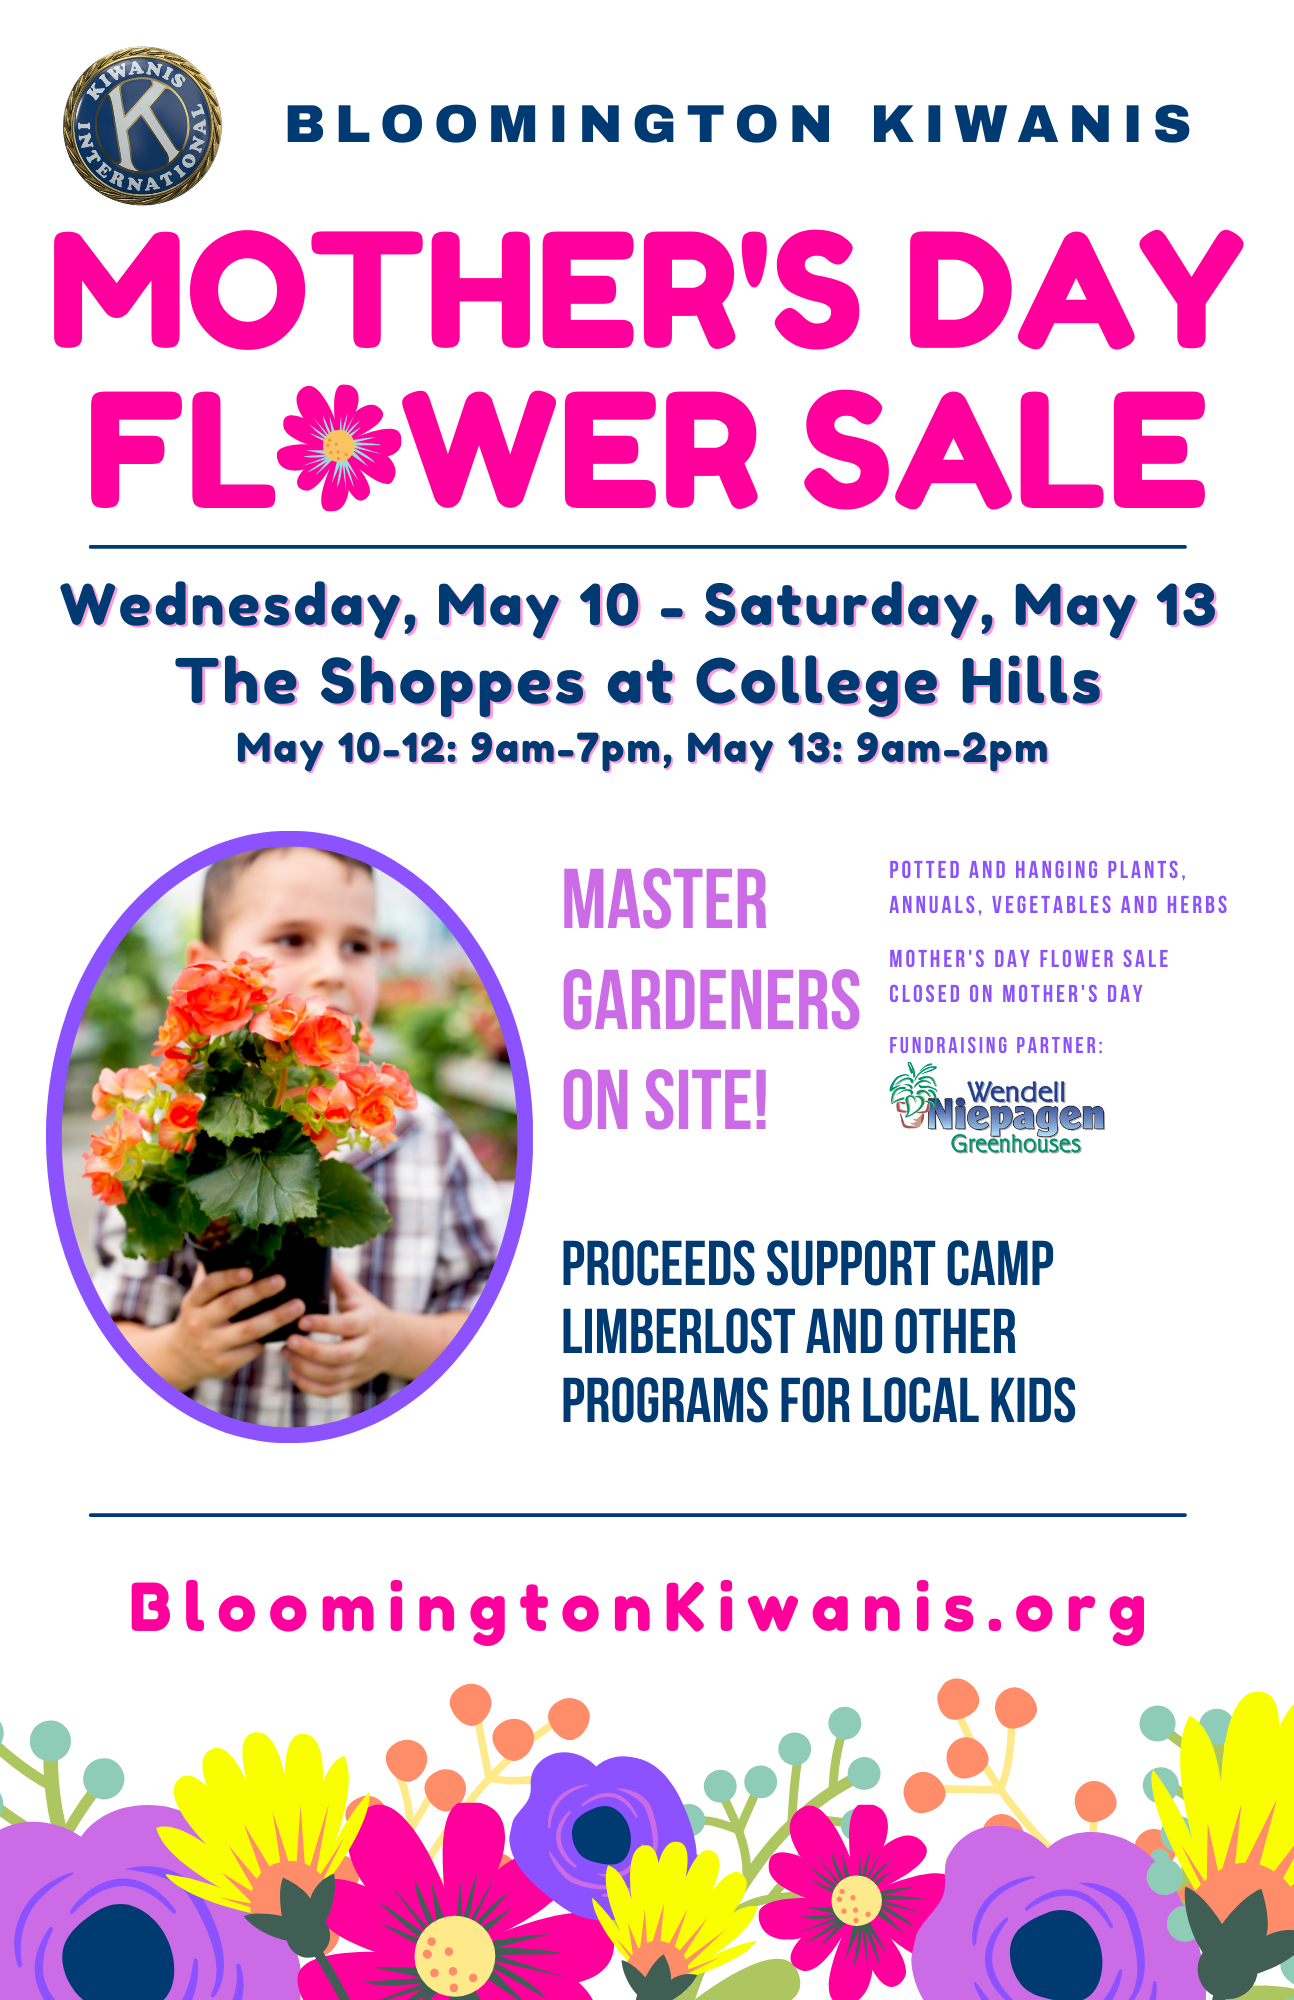 Bloomington Kiwanis Mother's Day Flower Sale